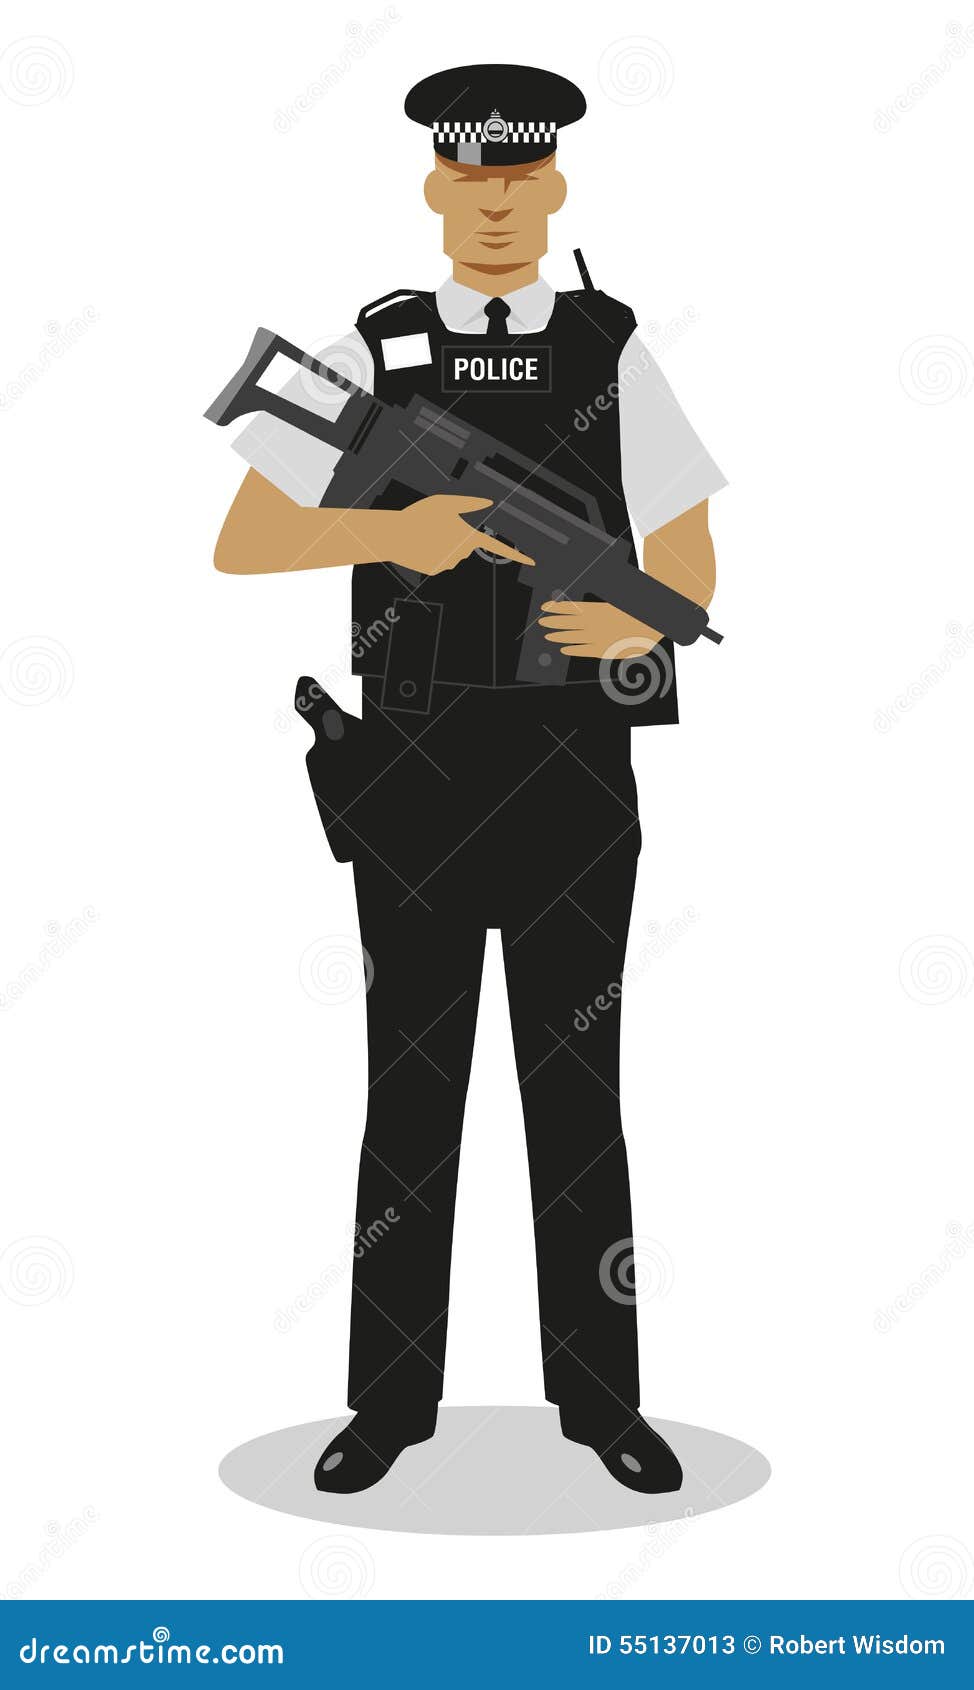 uk policeman - armed anti-terrorist